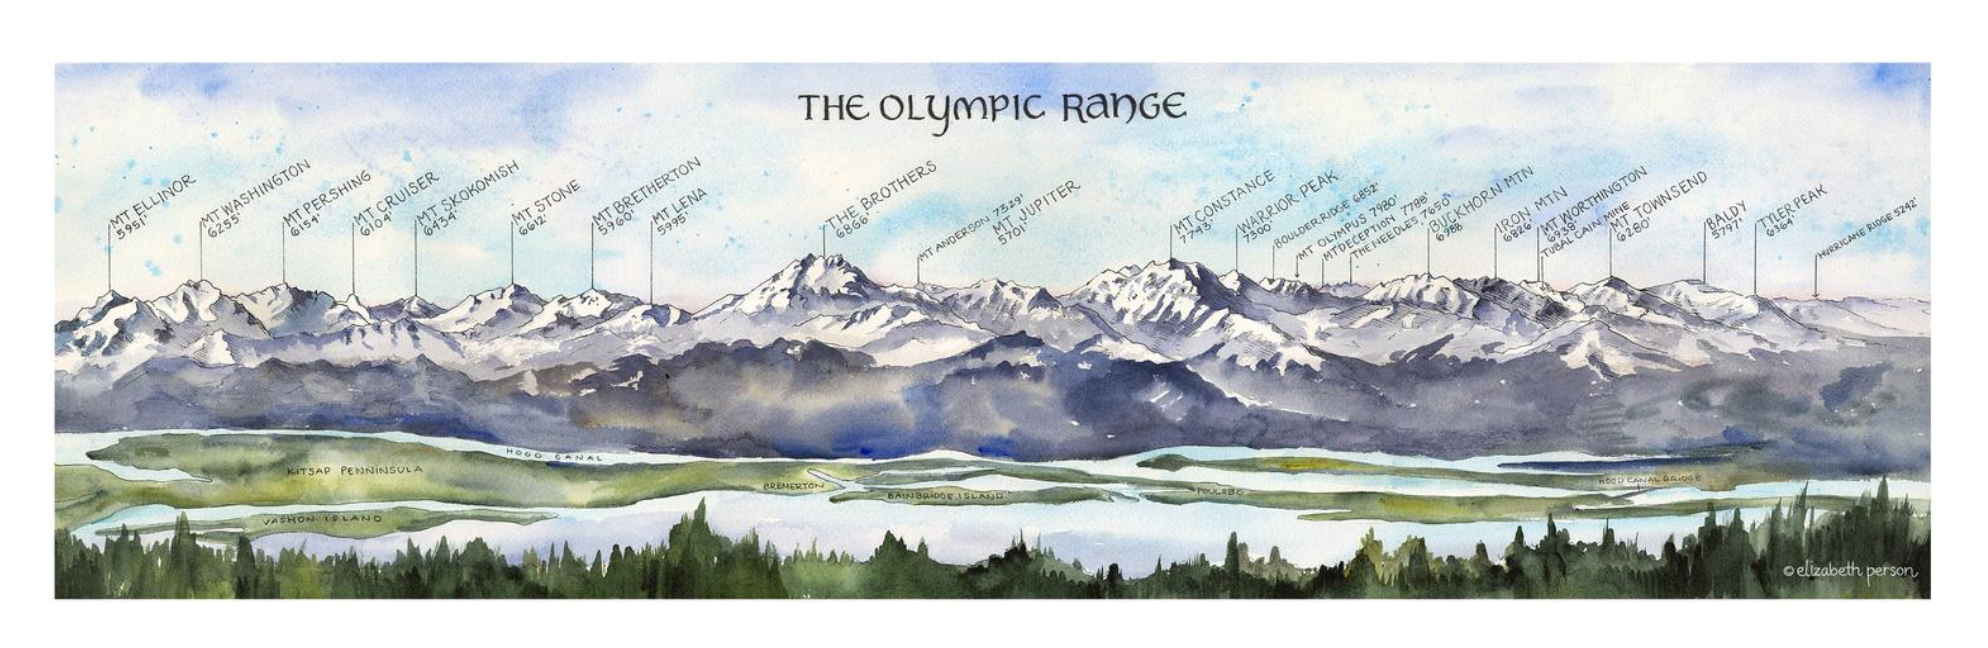 Print - 8x24 Panoramic The Olympic Range